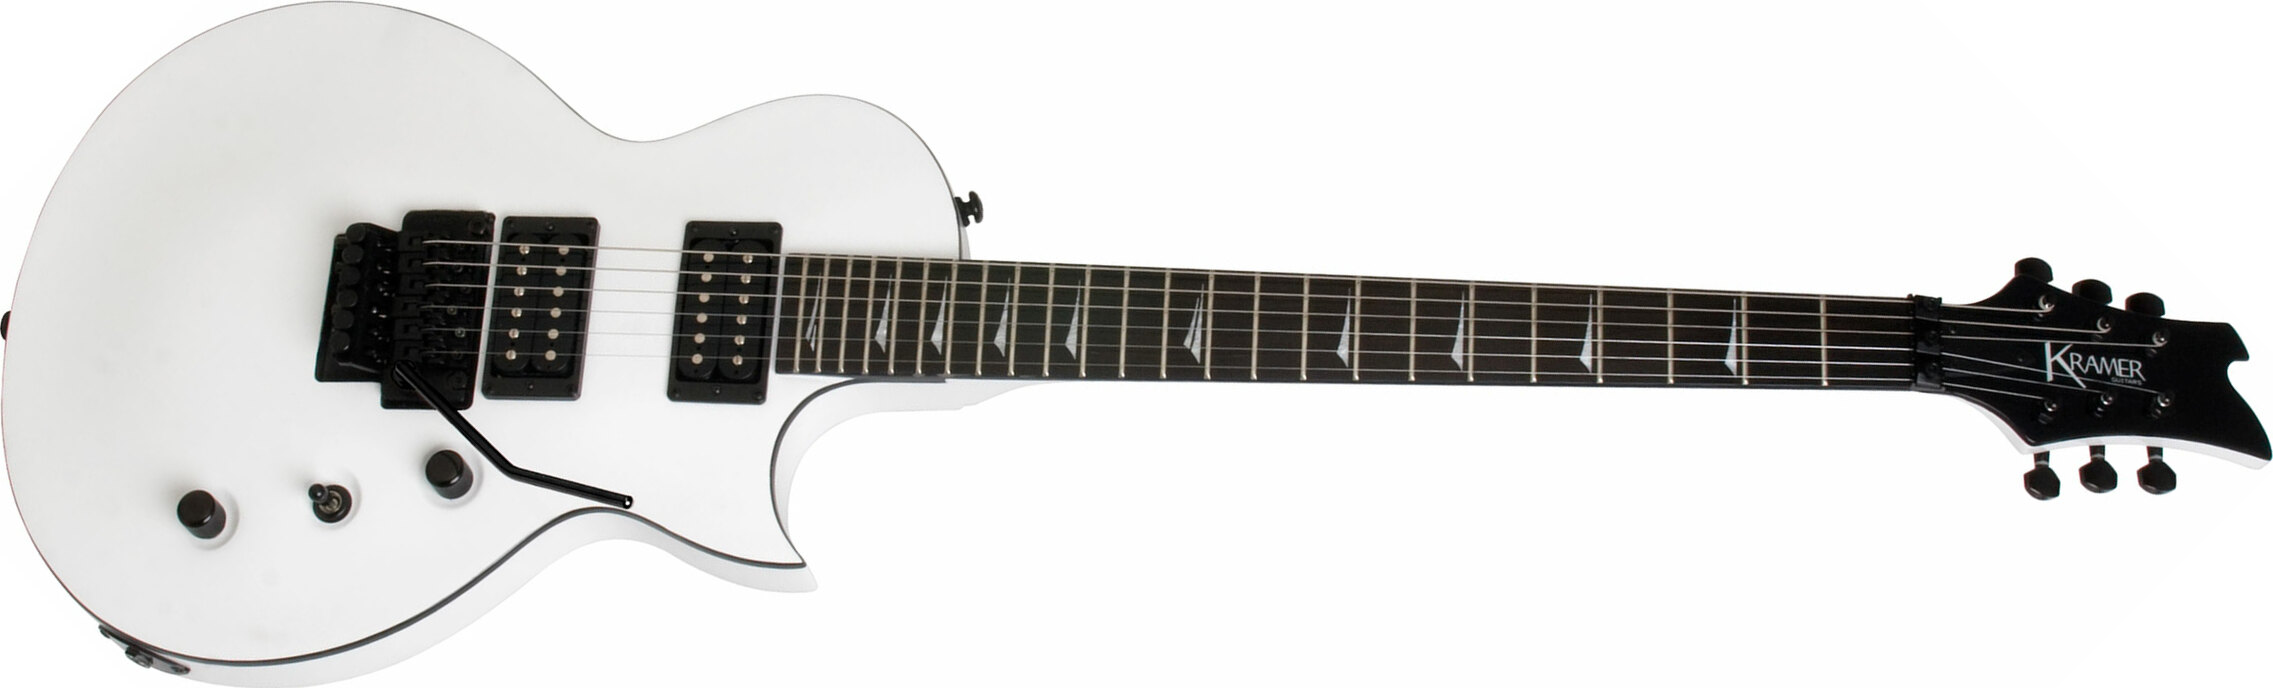 Kramer Assault 220 2h Fr Rw - Alpine White - Single cut electric guitar - Main picture